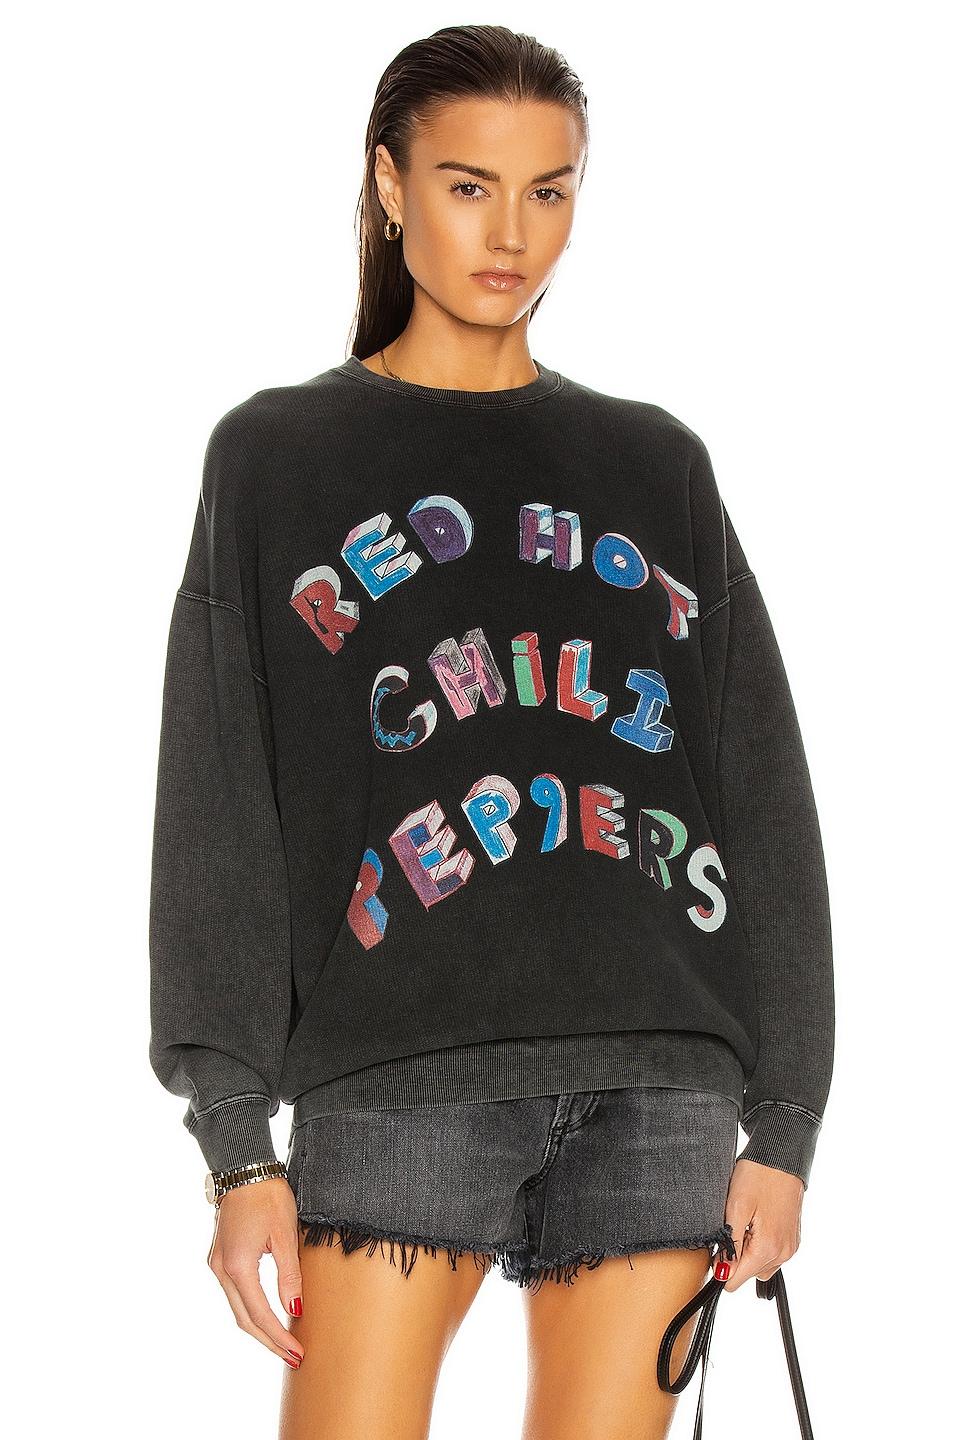 R13 Red Hot Chili Peppers Oversized in Flea Art Lyst Black Sweatshirt 